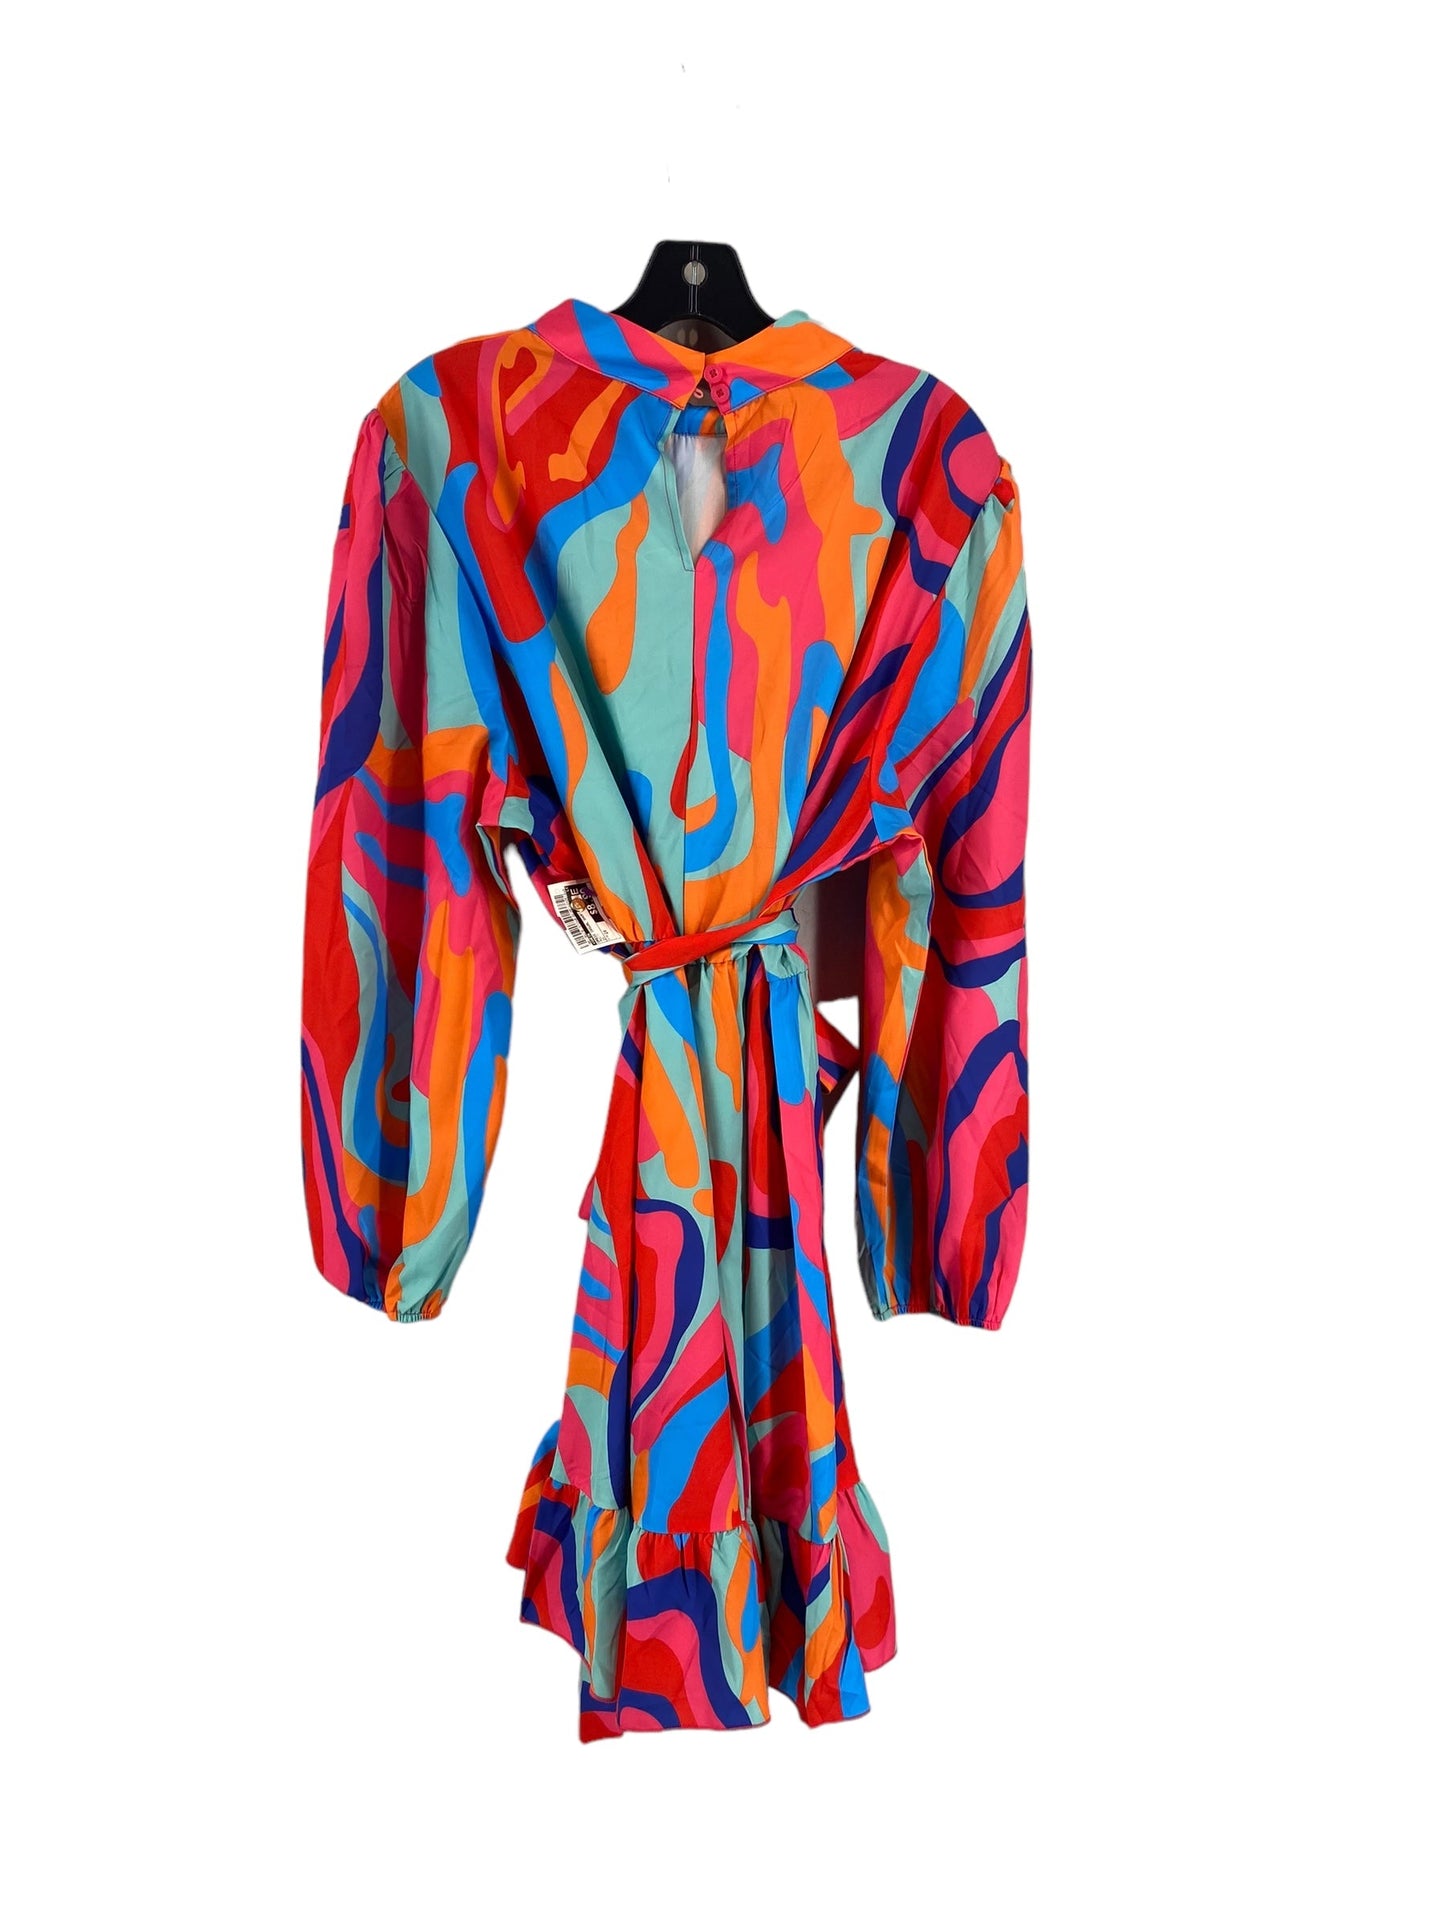 Multi-colored Dress Casual Short Shein, Size 2x